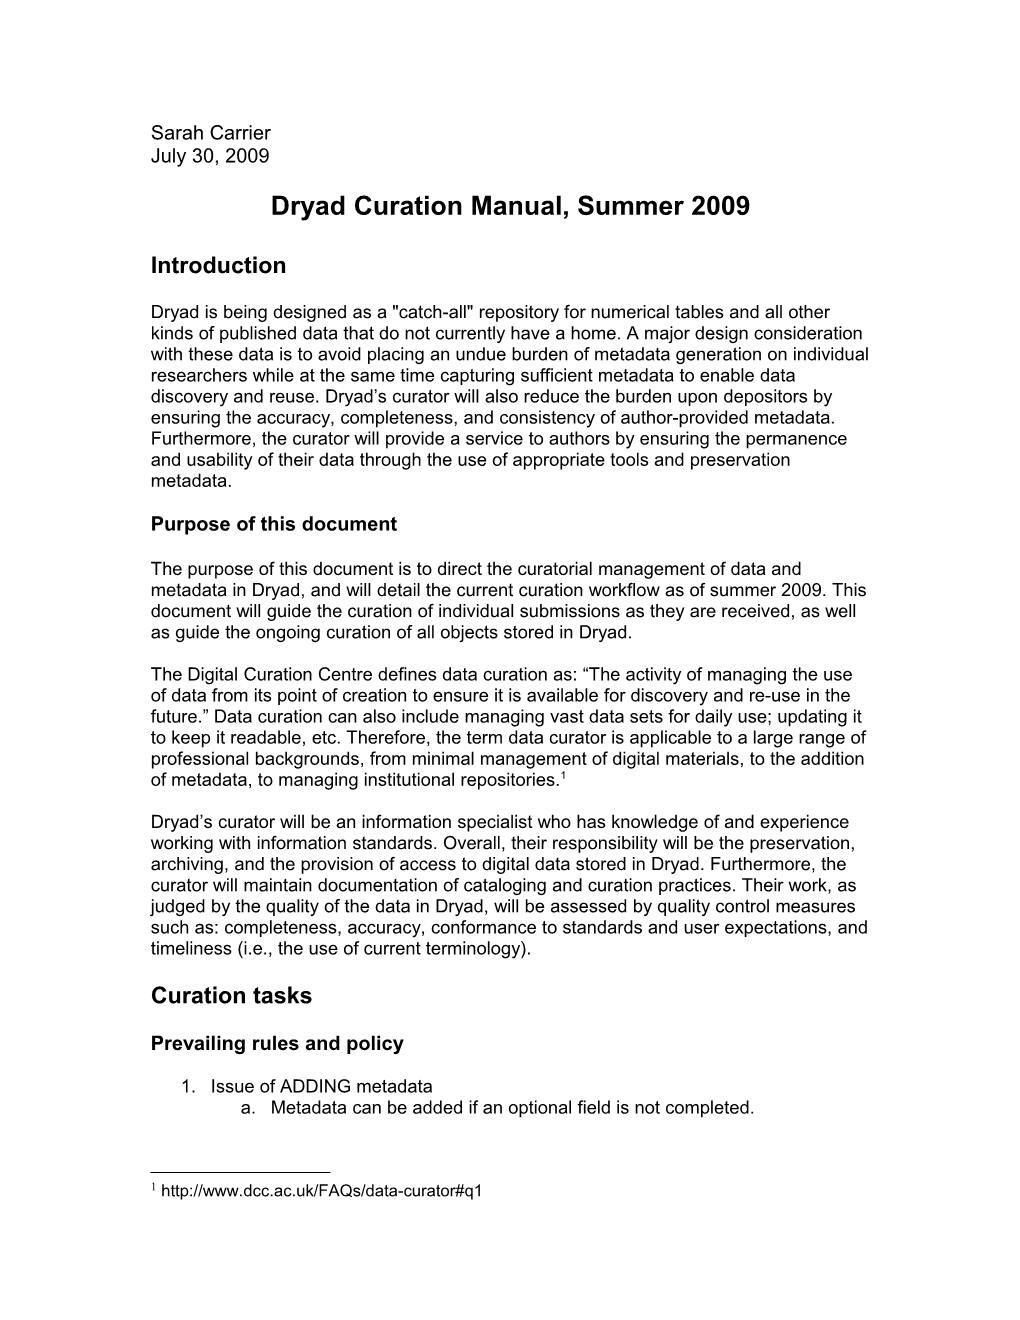 Dryad Curation Manual, Summer 2009